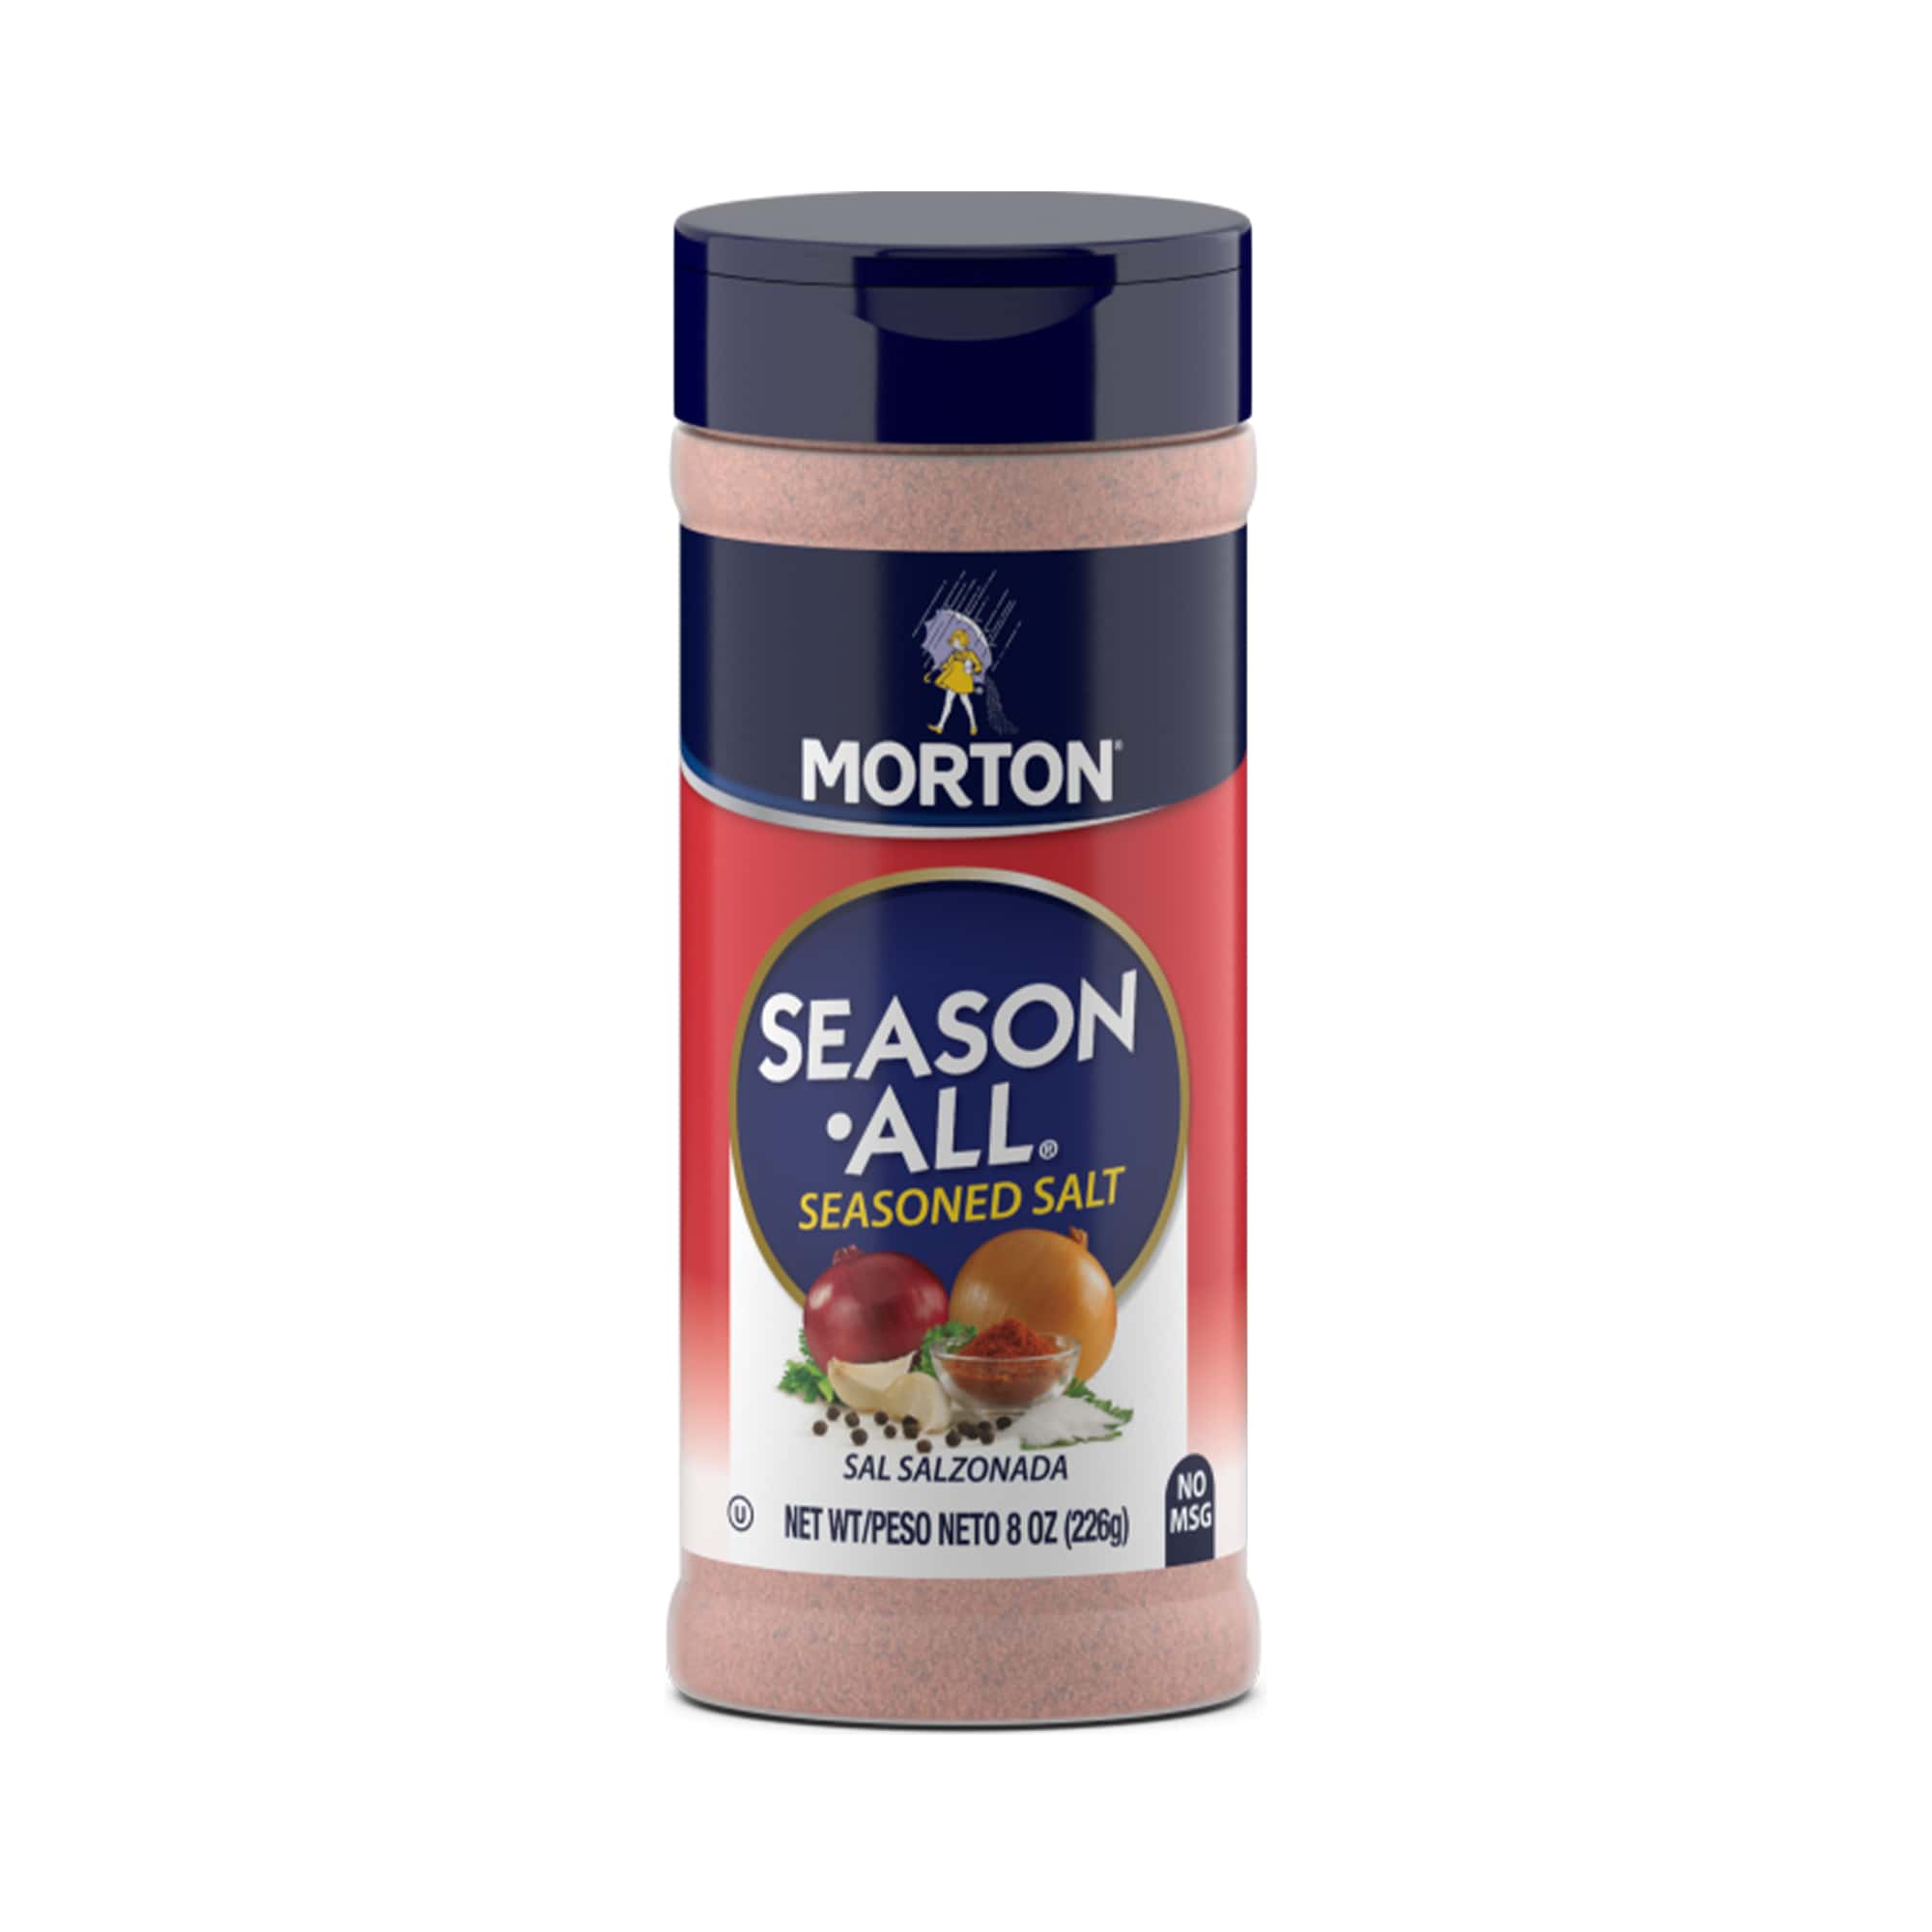 Morton Season All Seasoned Salt - 8 oz for sale online